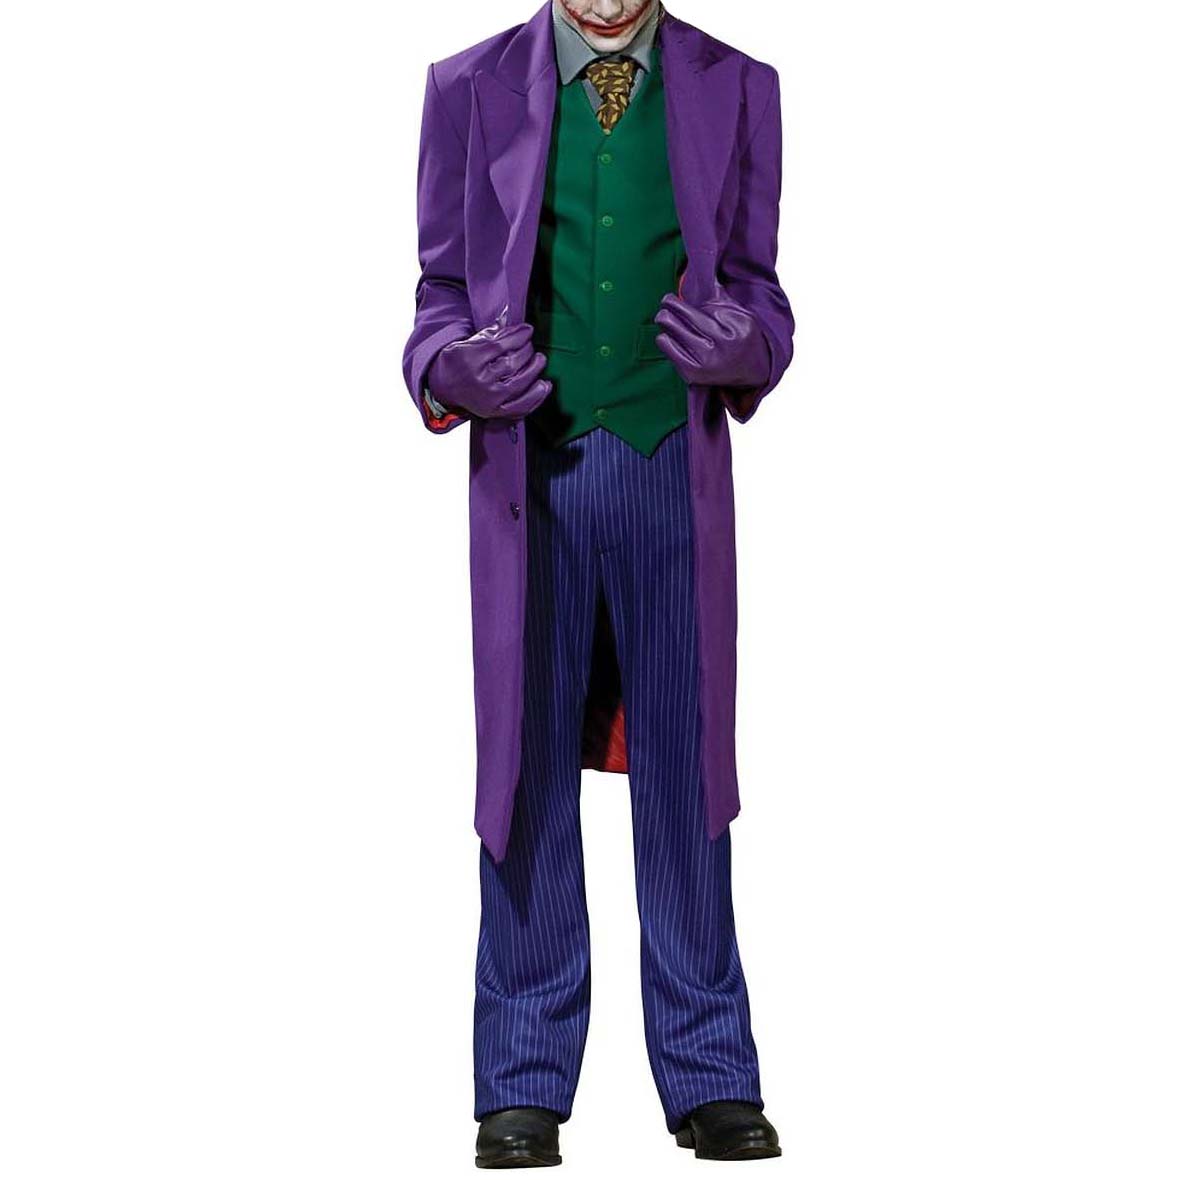 Rubie's Grand Heritage Dark Knight Adult Joker Villain Costume, Medium | 56215 - image 5 of 5